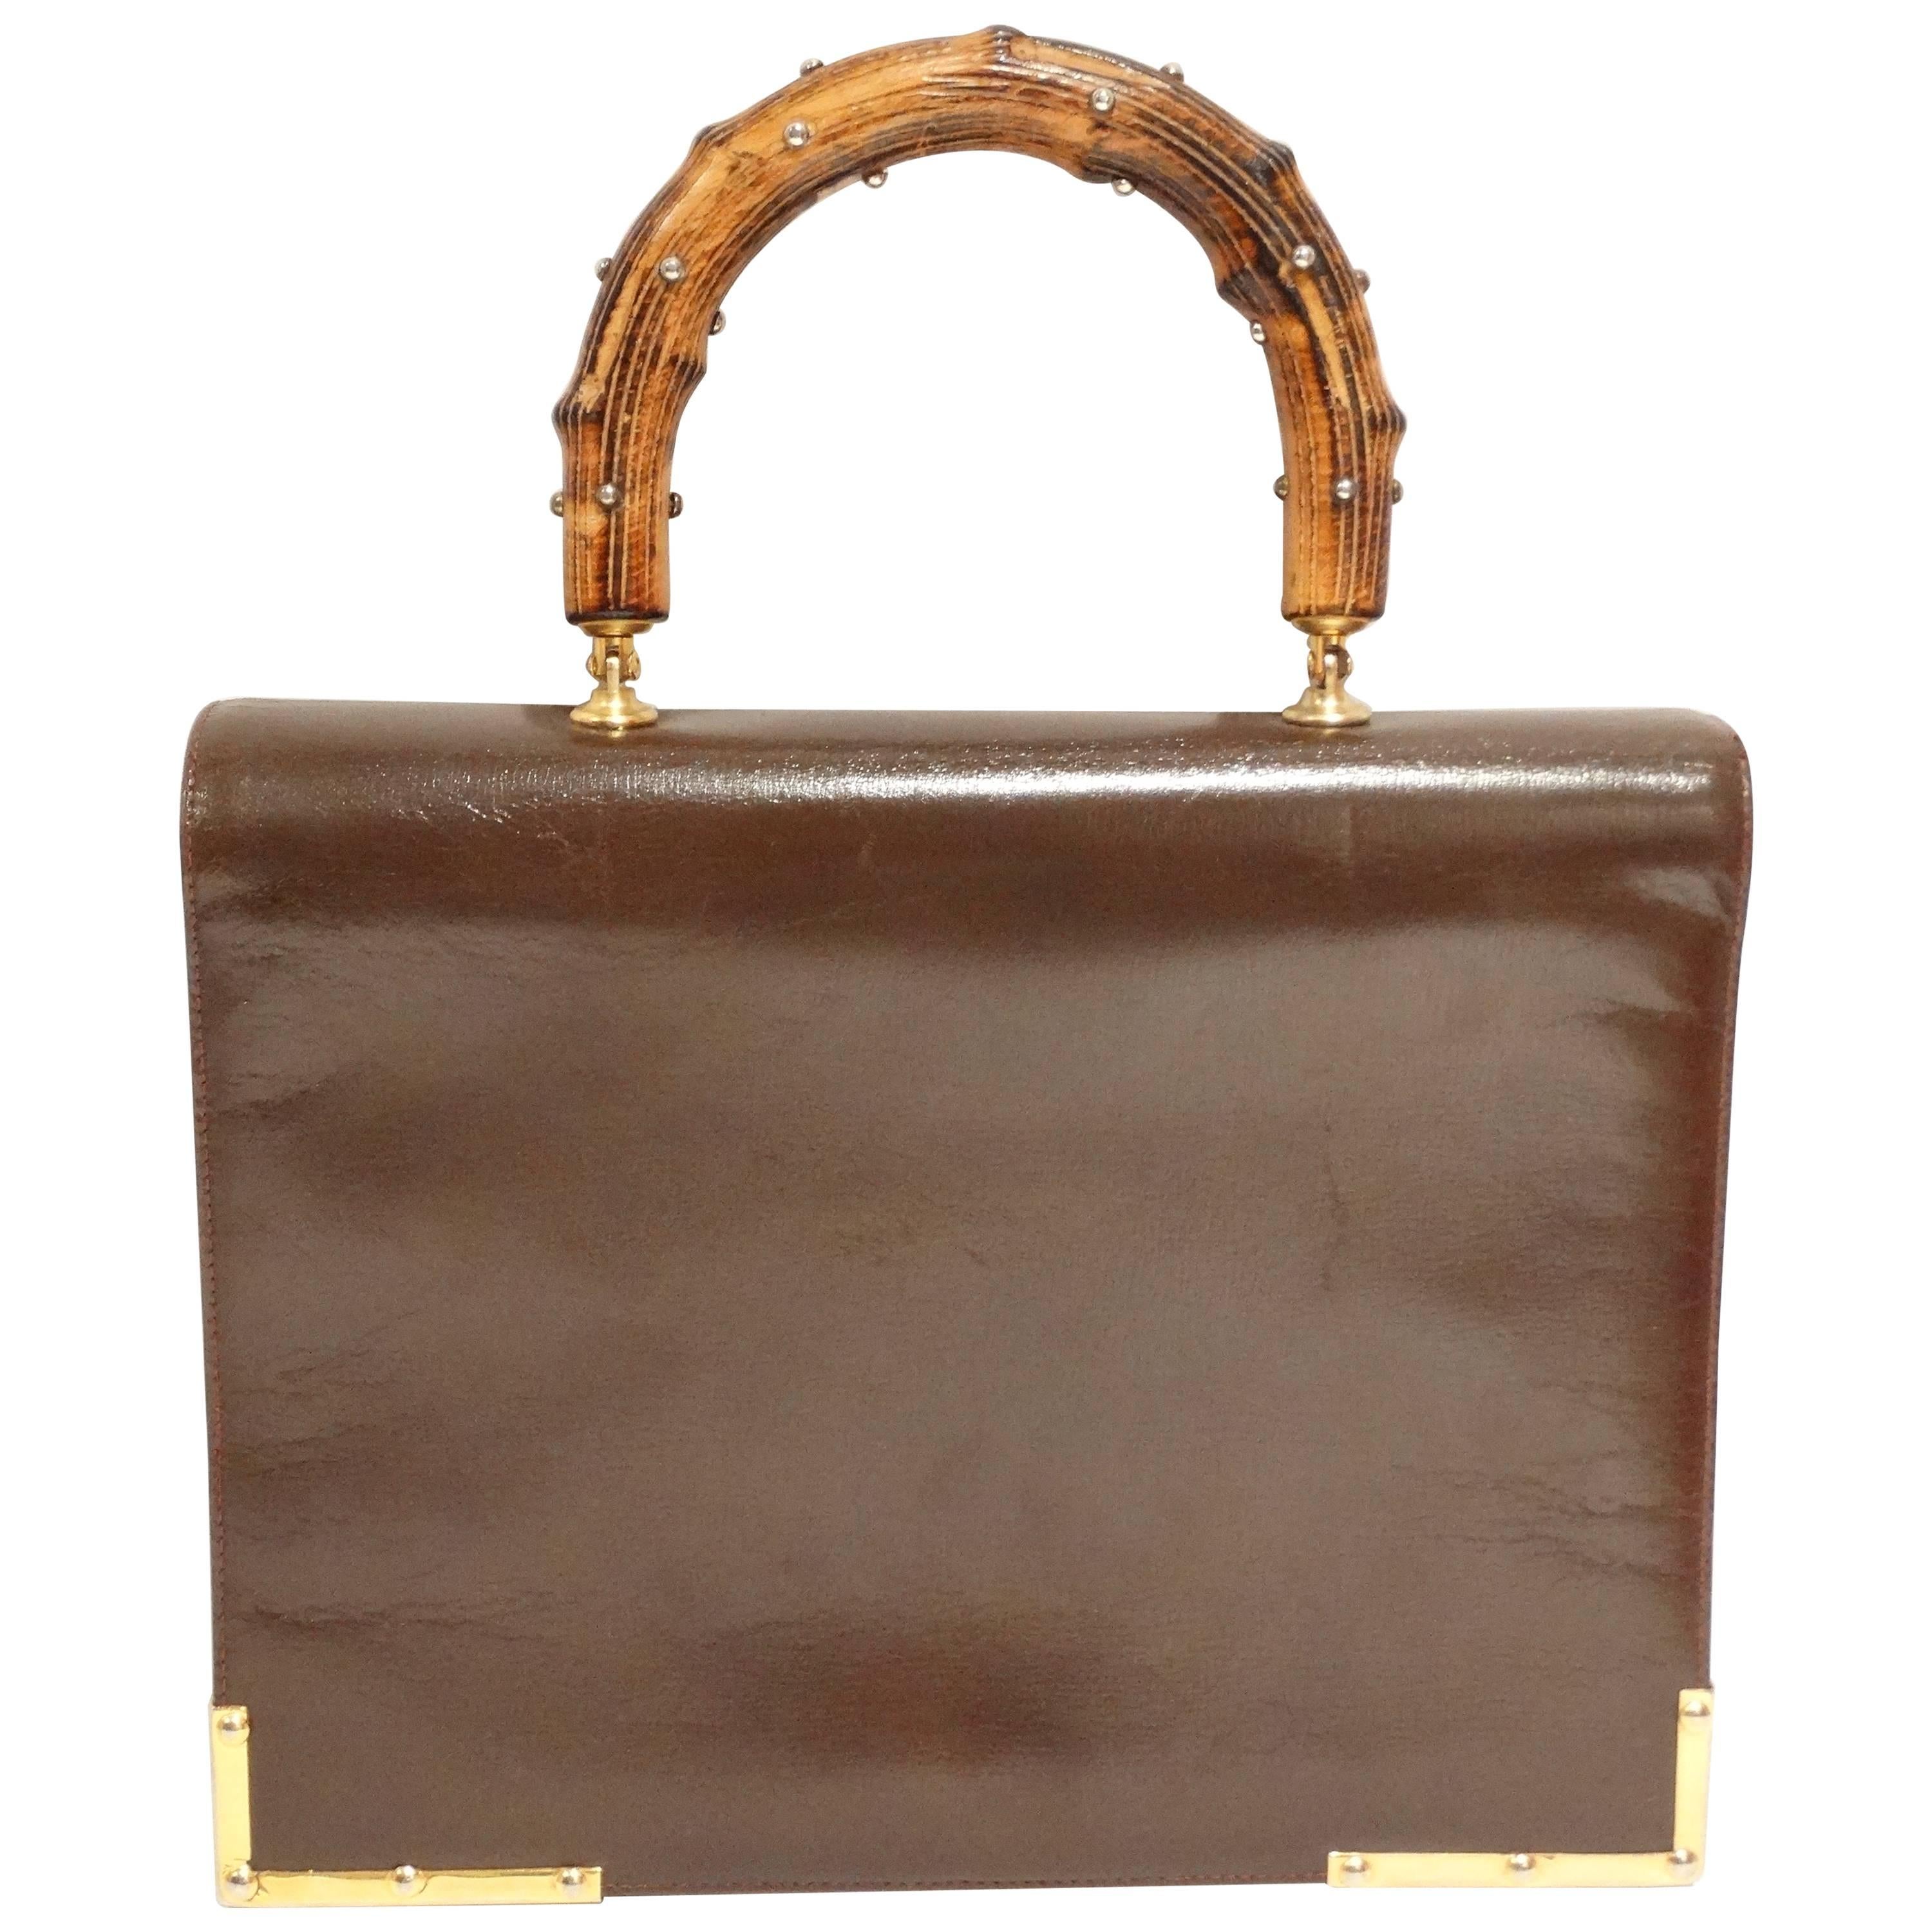 1950s Gorgeous Susan Gail Handbag with Embellished Wood Handle